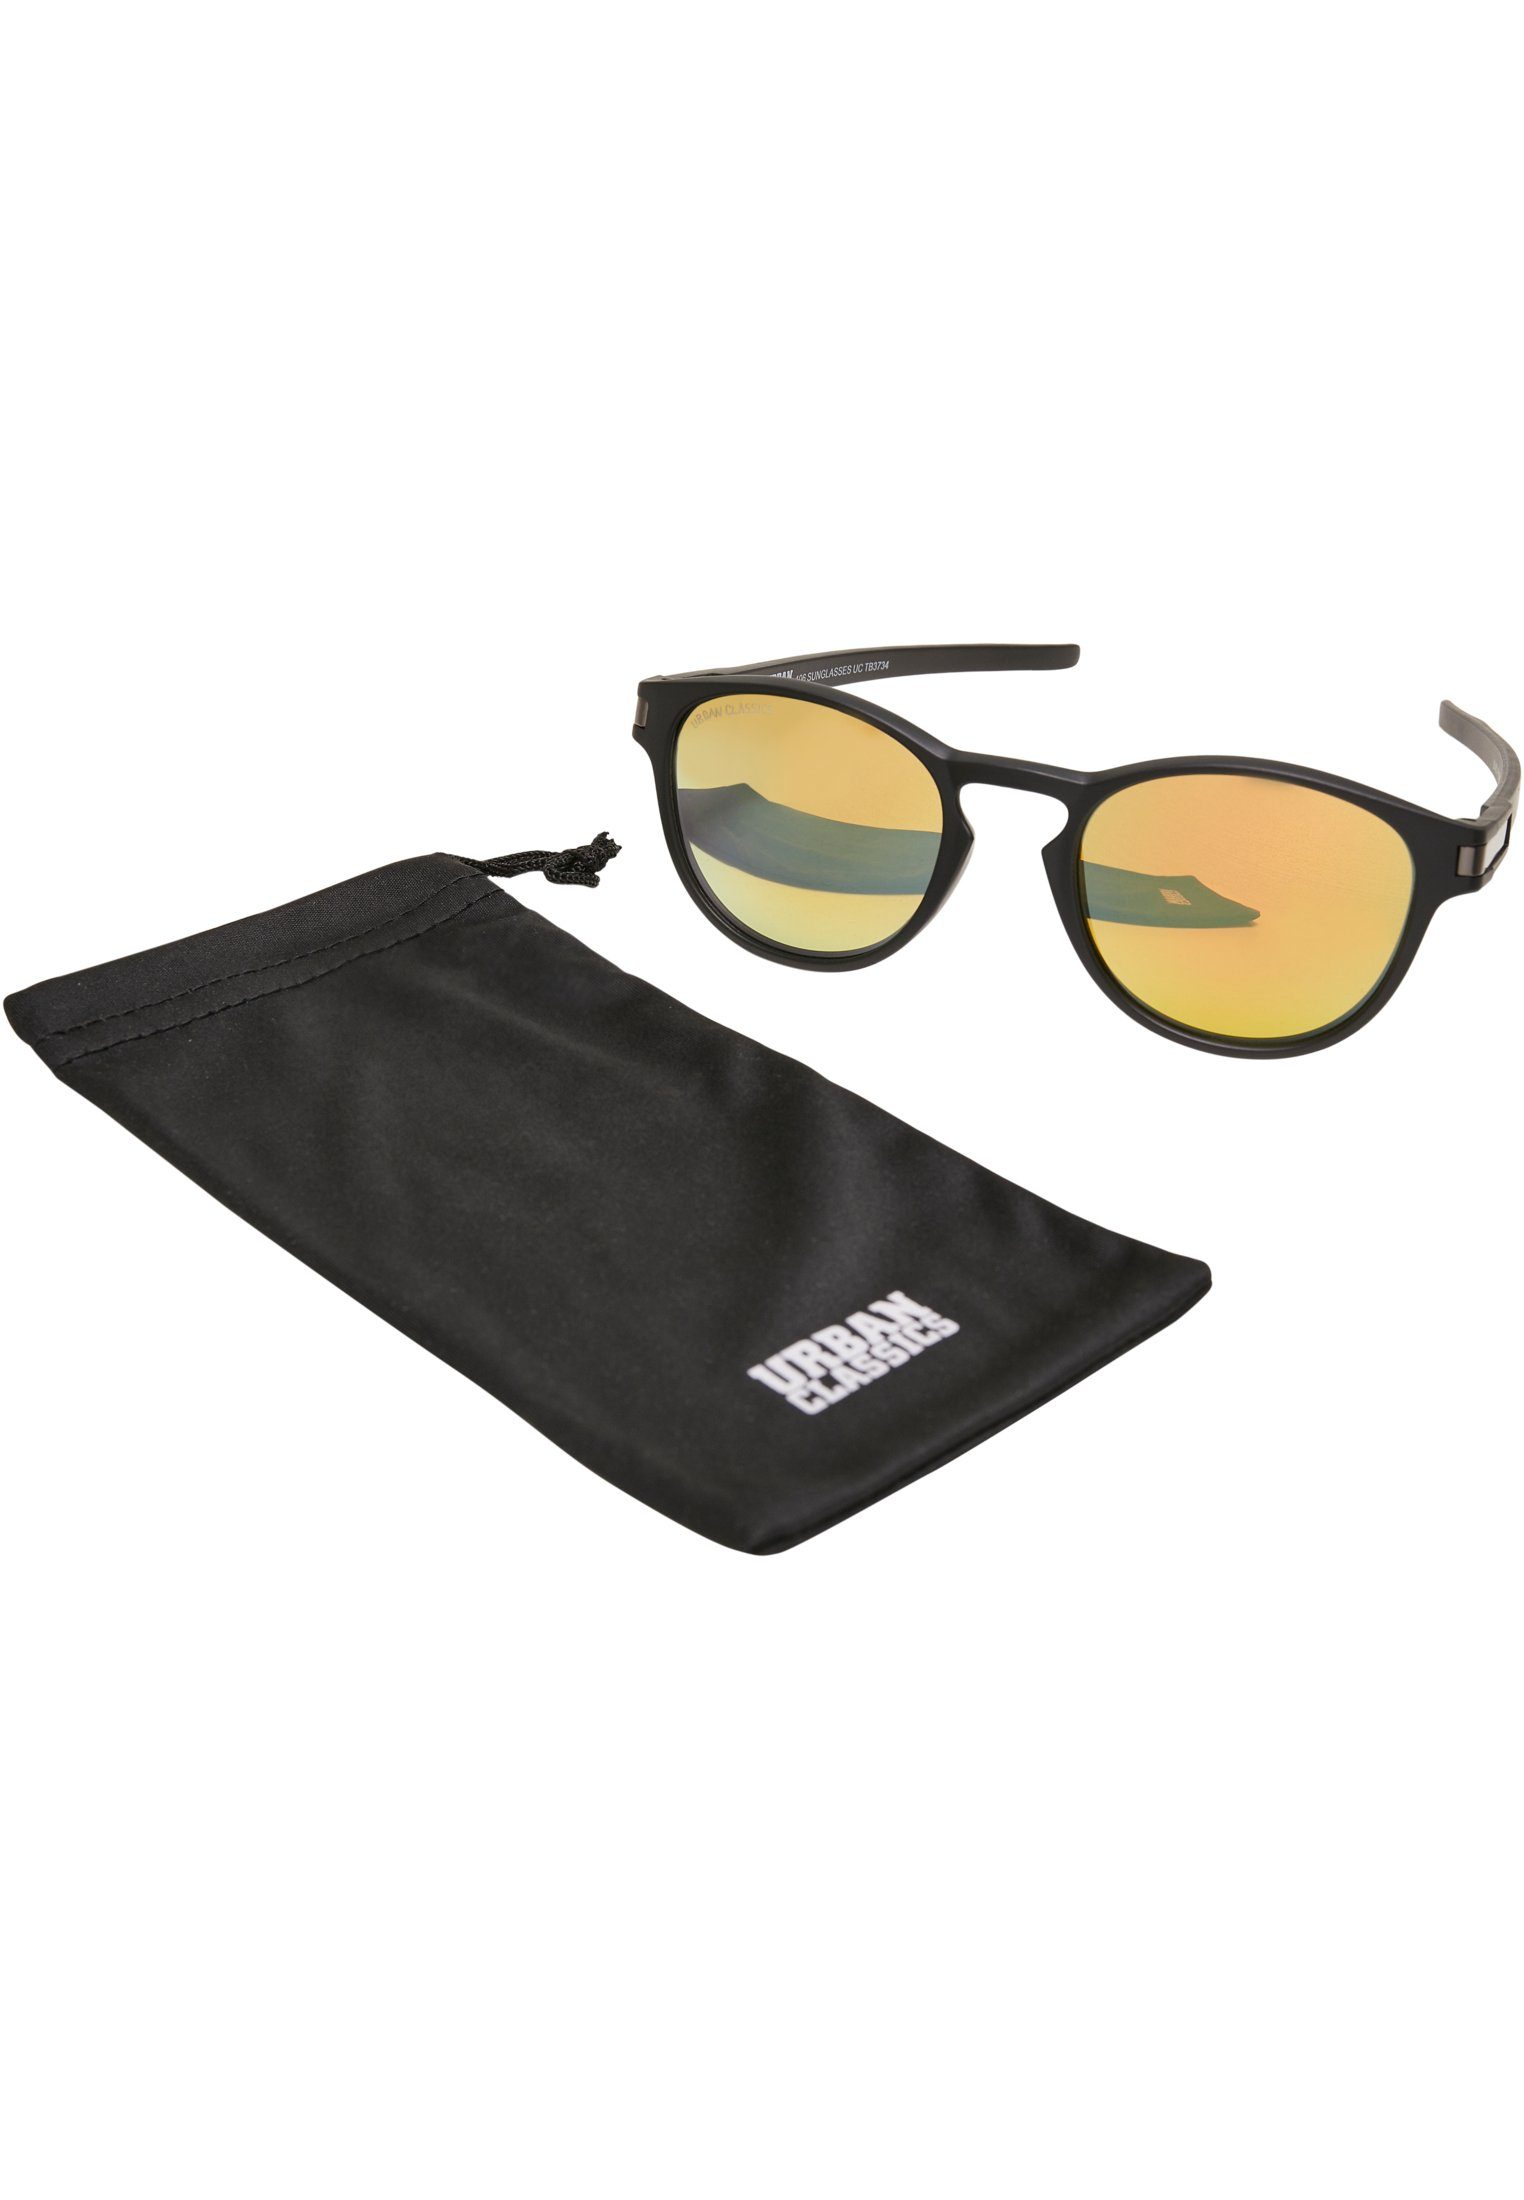 URBAN CLASSICS Sonnenbrille Sunglasses black/orange Accessoires 106 UC